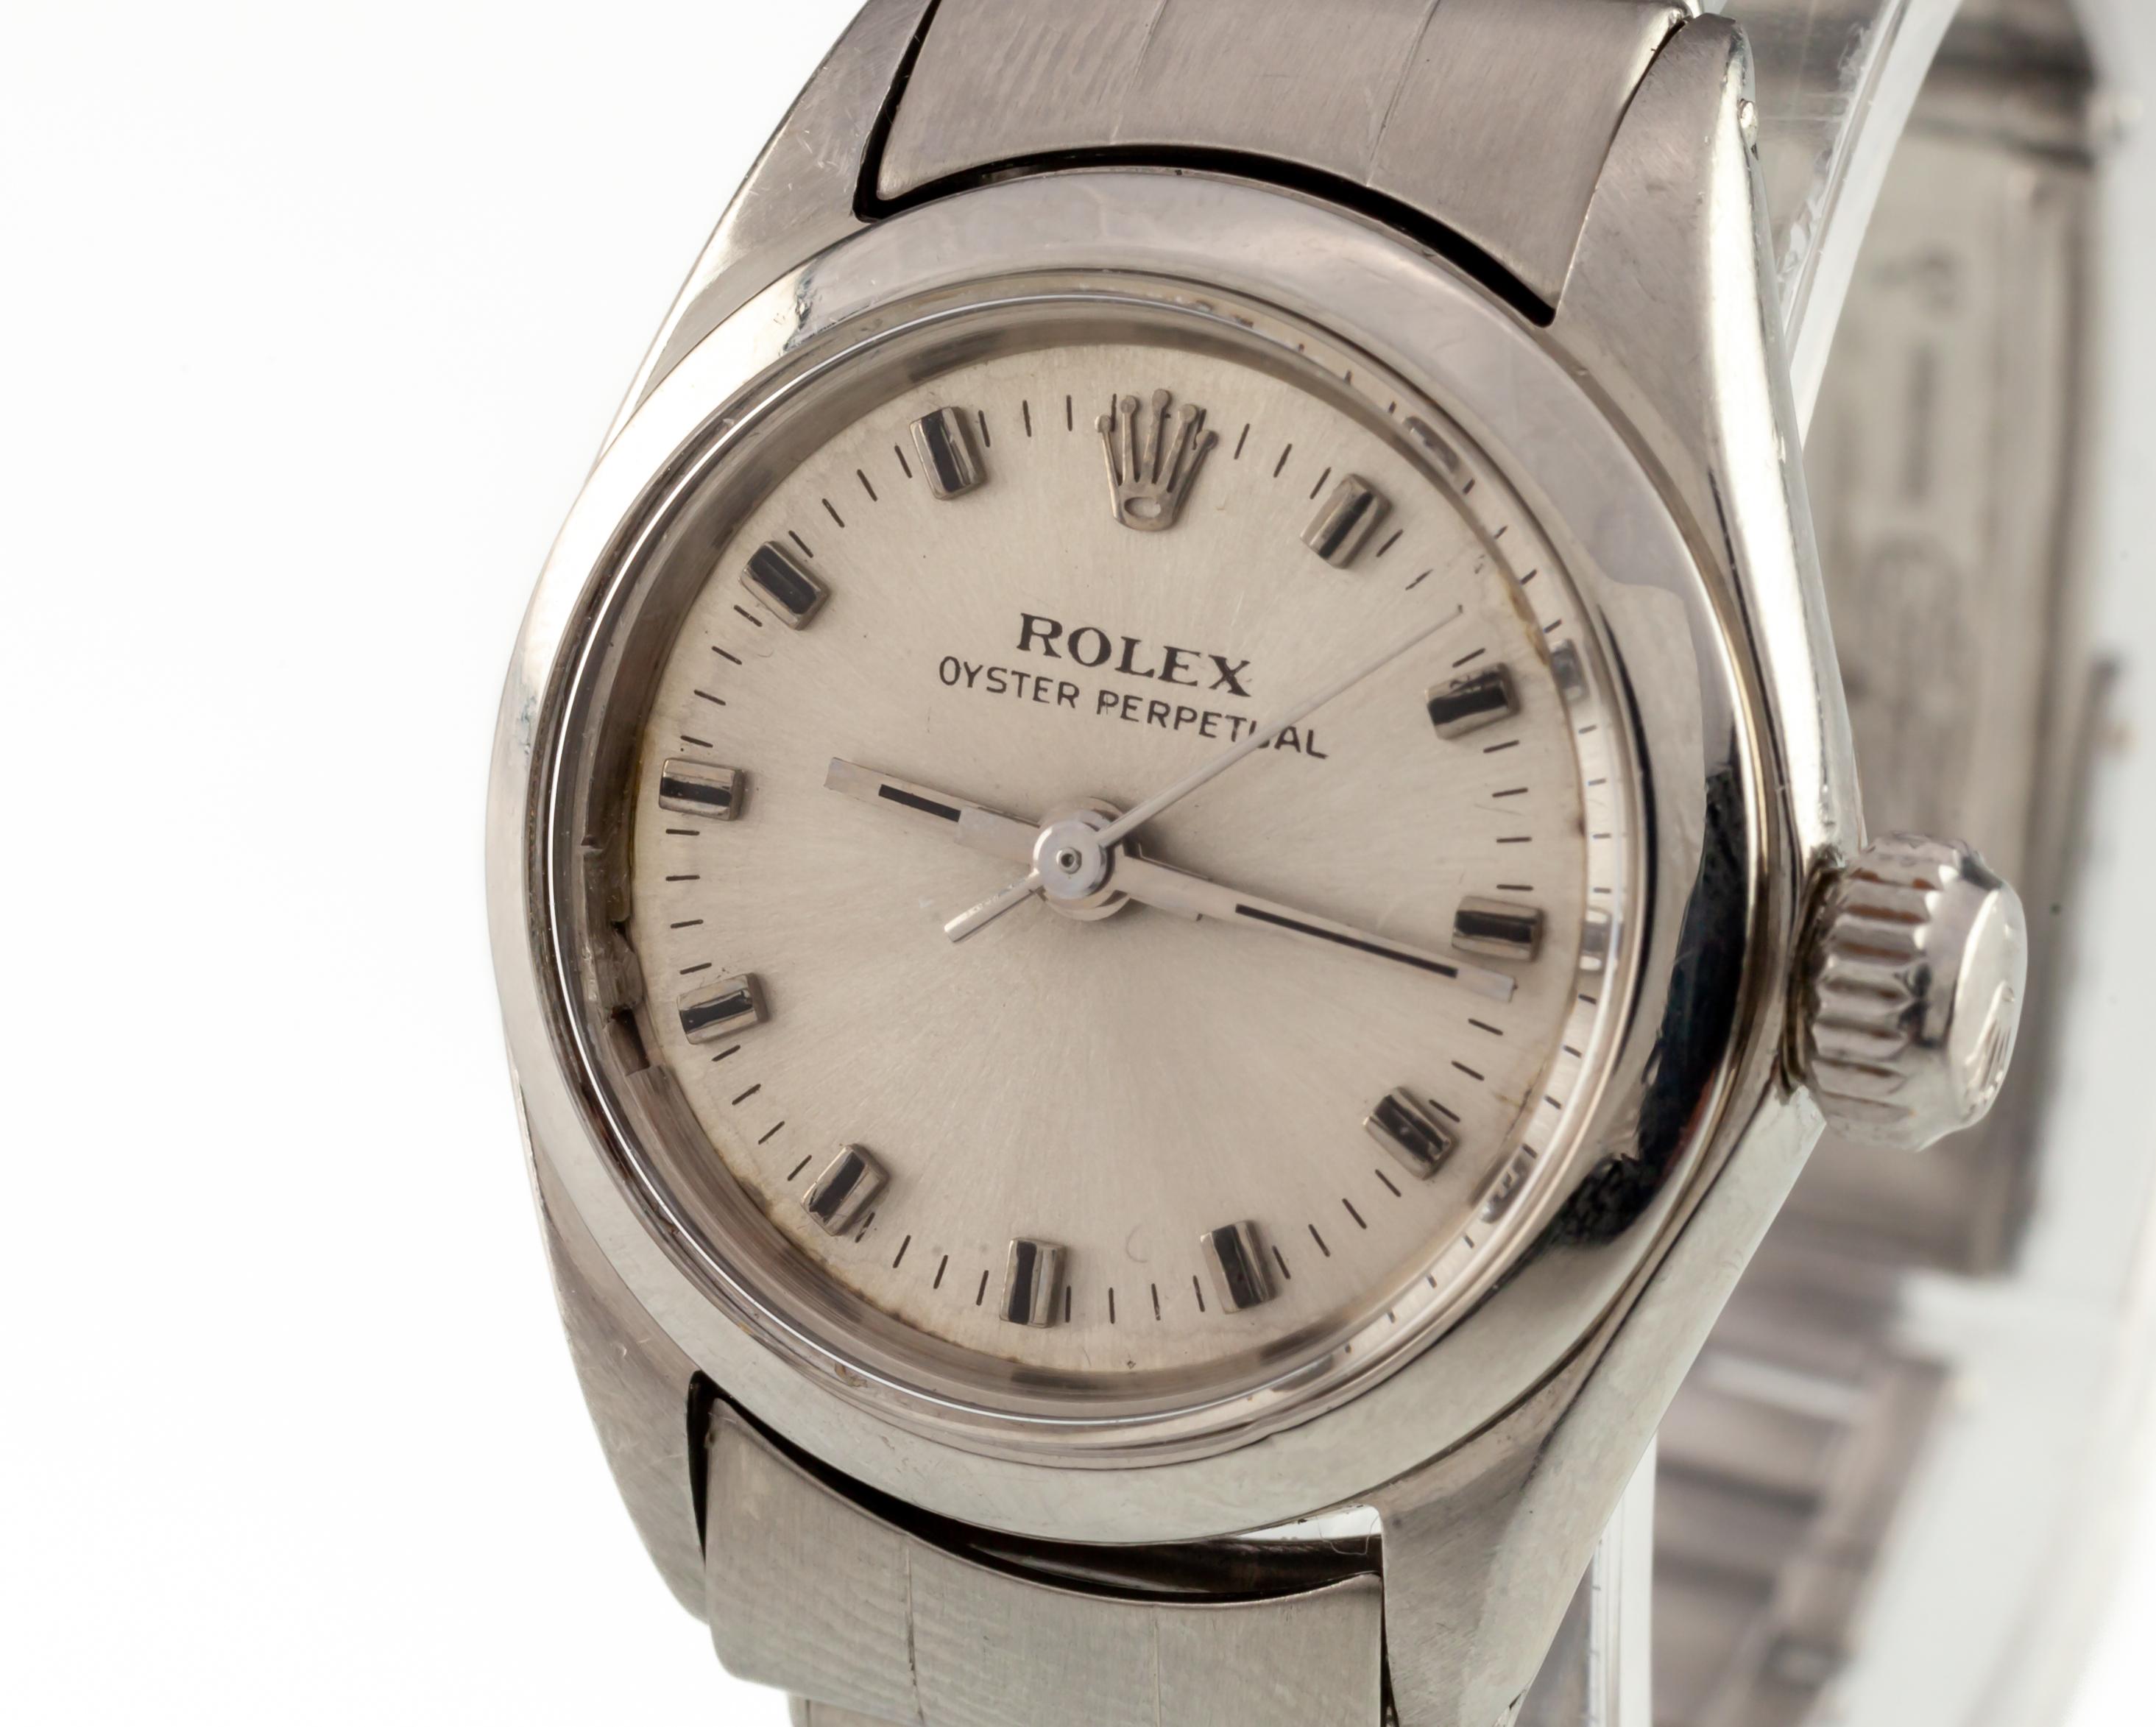 Rolex Ladies Stainless Steel Oyster Perpetual Watch #6618 1969 Vintage

Model #6618
Serial #20712XX
Year: 1969
Movement #1161
Movement Serial #265XX
26 Jewels

Stainless Steel Round Case
26 mm in Diameter
Lug-to-Lug Distance = 31 mm
Lug-to-Lug Width